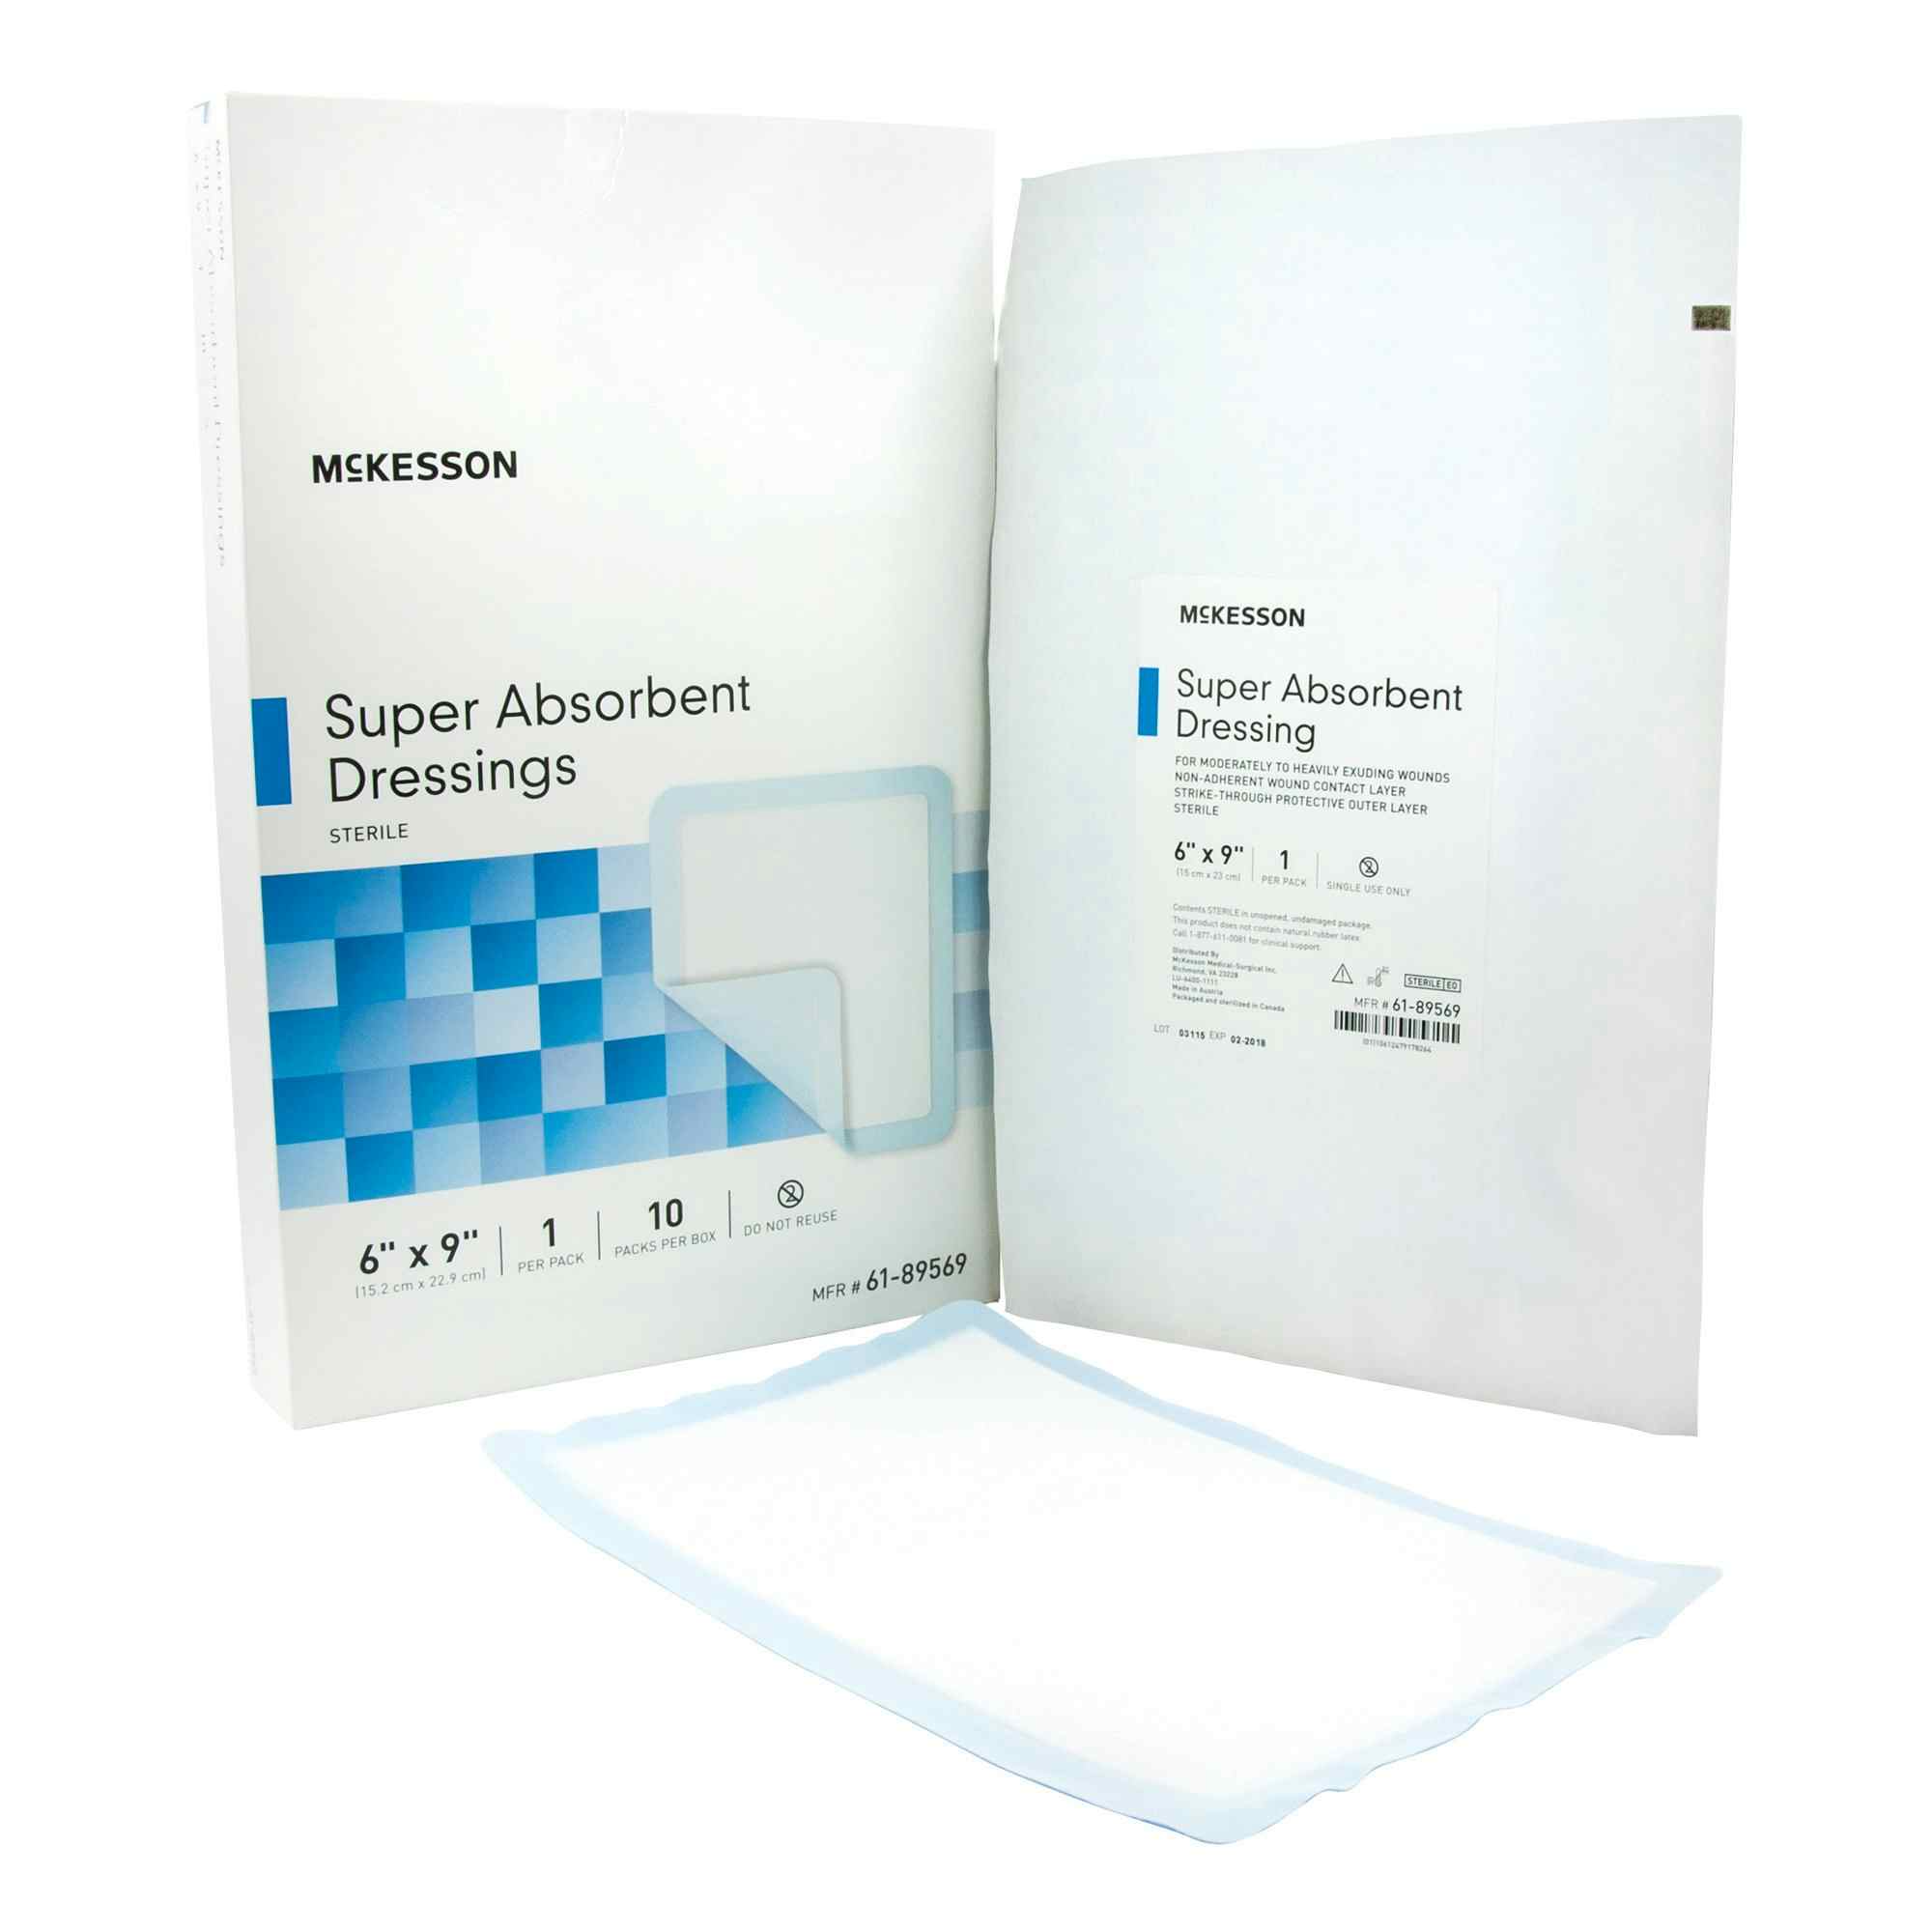 McKesson Super Absorbent Dressings, 6 X 9", 61-89569, Box of 10